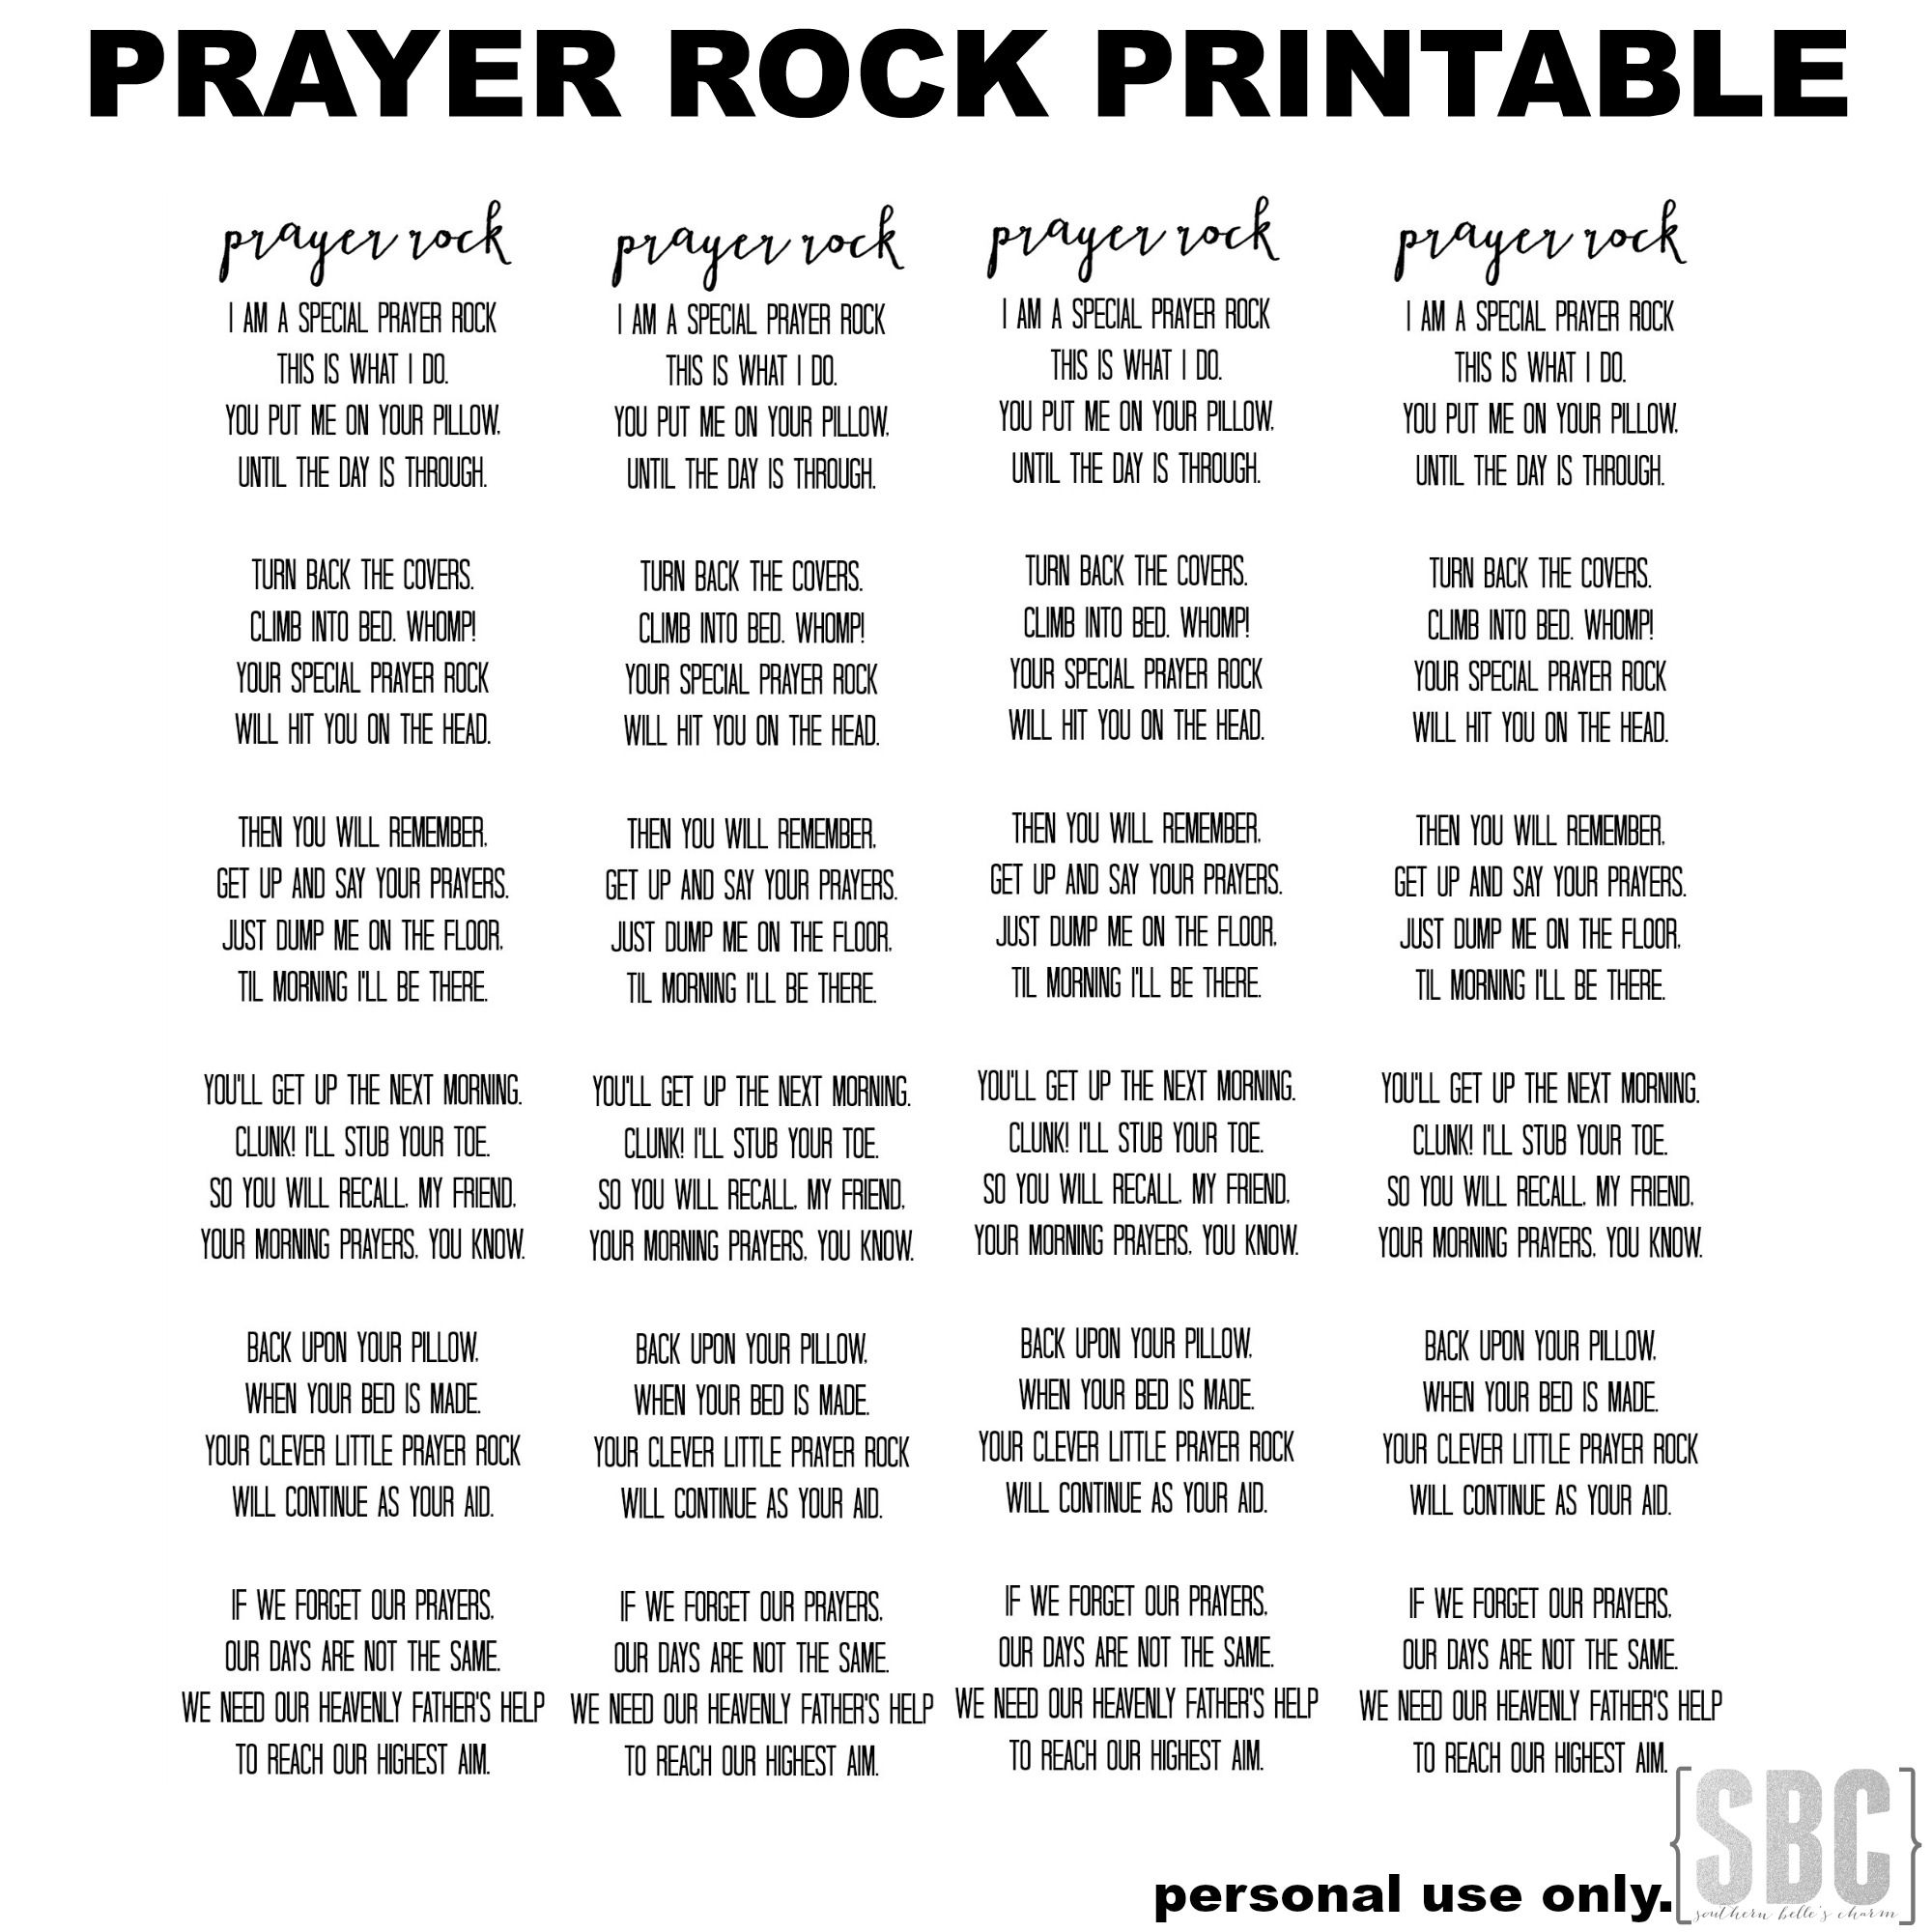 Prayer Rock Printable Prayer Rocks Vacation Bible School Themes Prayers